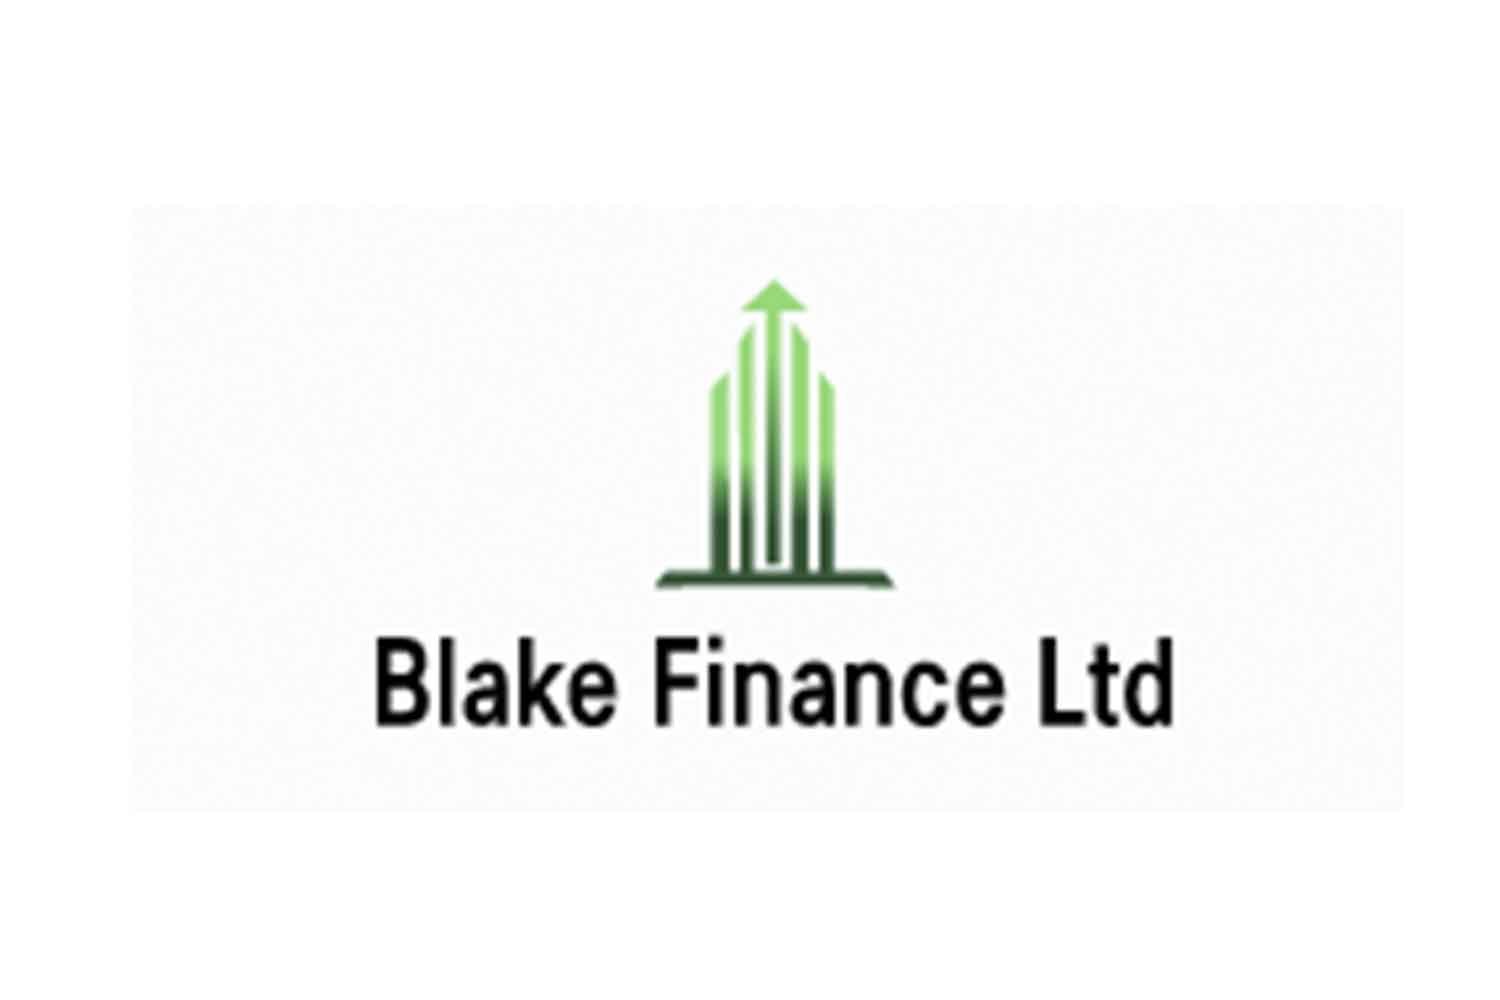 Northglen investment limited отзывы. Blake Finance. Blake Finance Ltd отзывы. Писиджи Файненс Лтд. ABH Financial Limited.